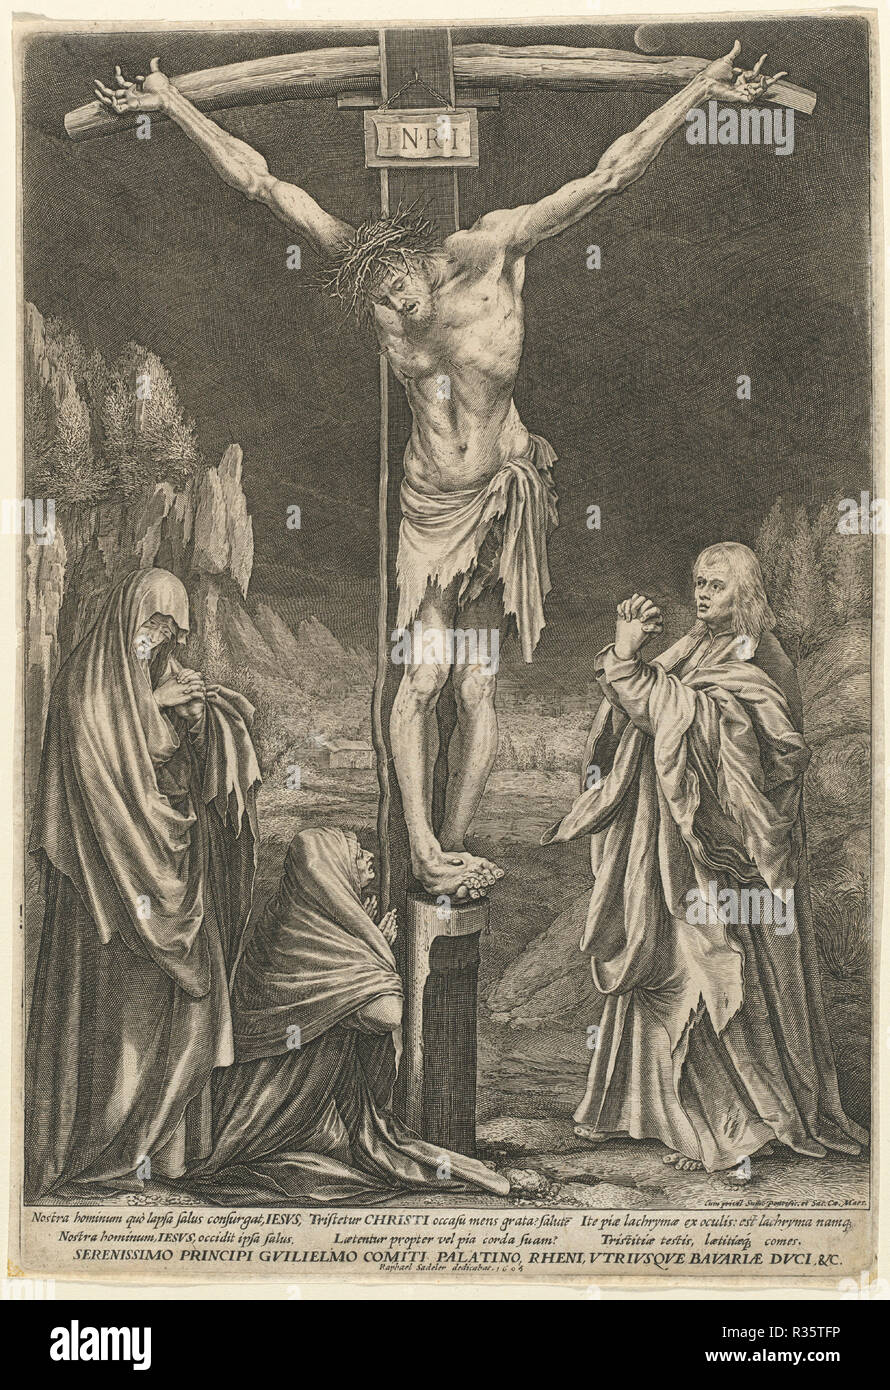 The Small Crucifixion. Dated: 1605. Medium: engraving. Museum: National Gallery of Art, Washington DC. Author: Raphael Sadeler I after Matthias Grünewald. Stock Photo